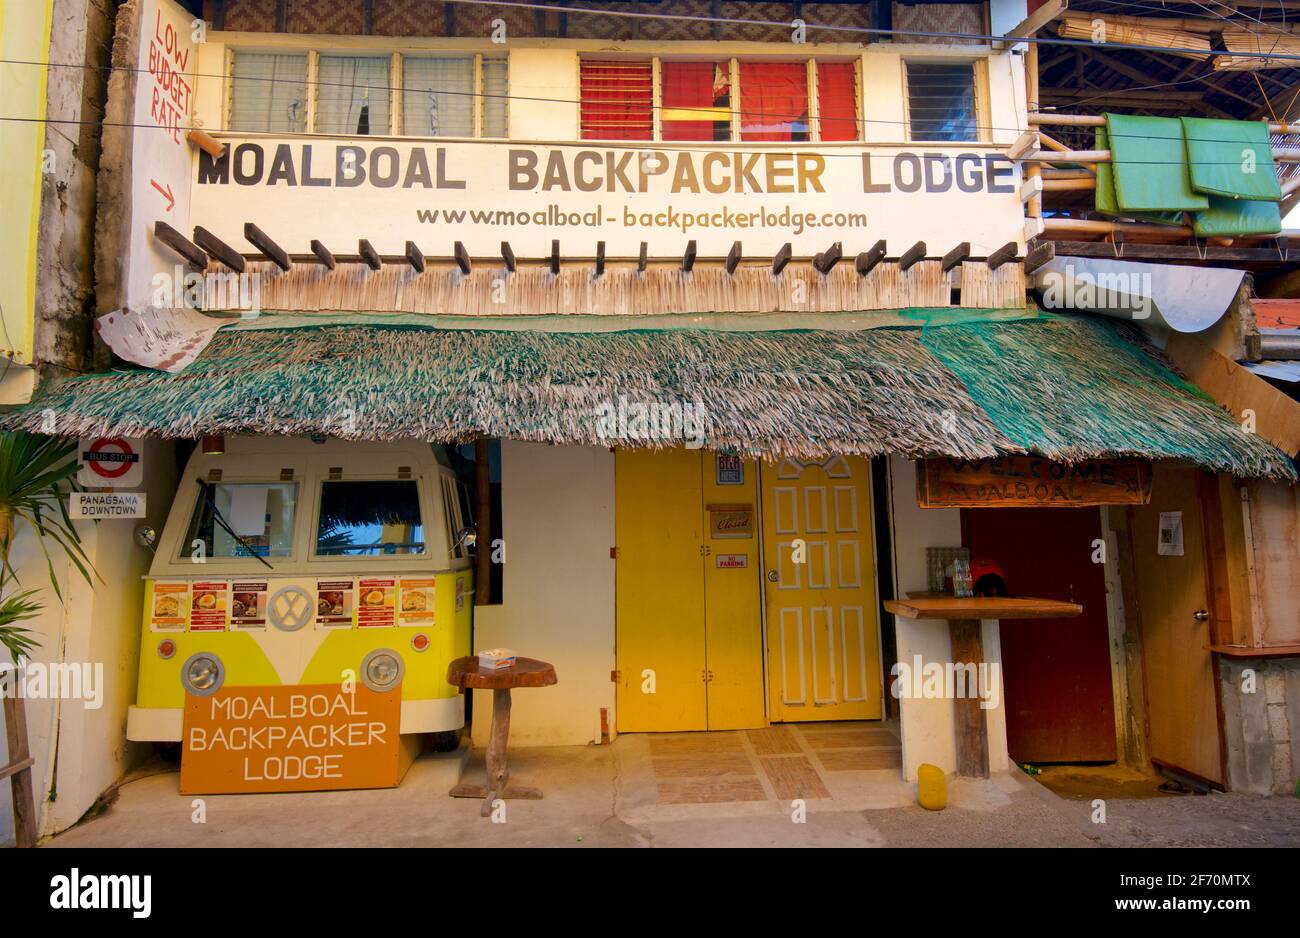 MOALBOAL BACKPACKER LODGE, MOalbial, Central Visayas, Cebu, Philippinen. Unterkunft für Rucksacktouristen Stockfoto